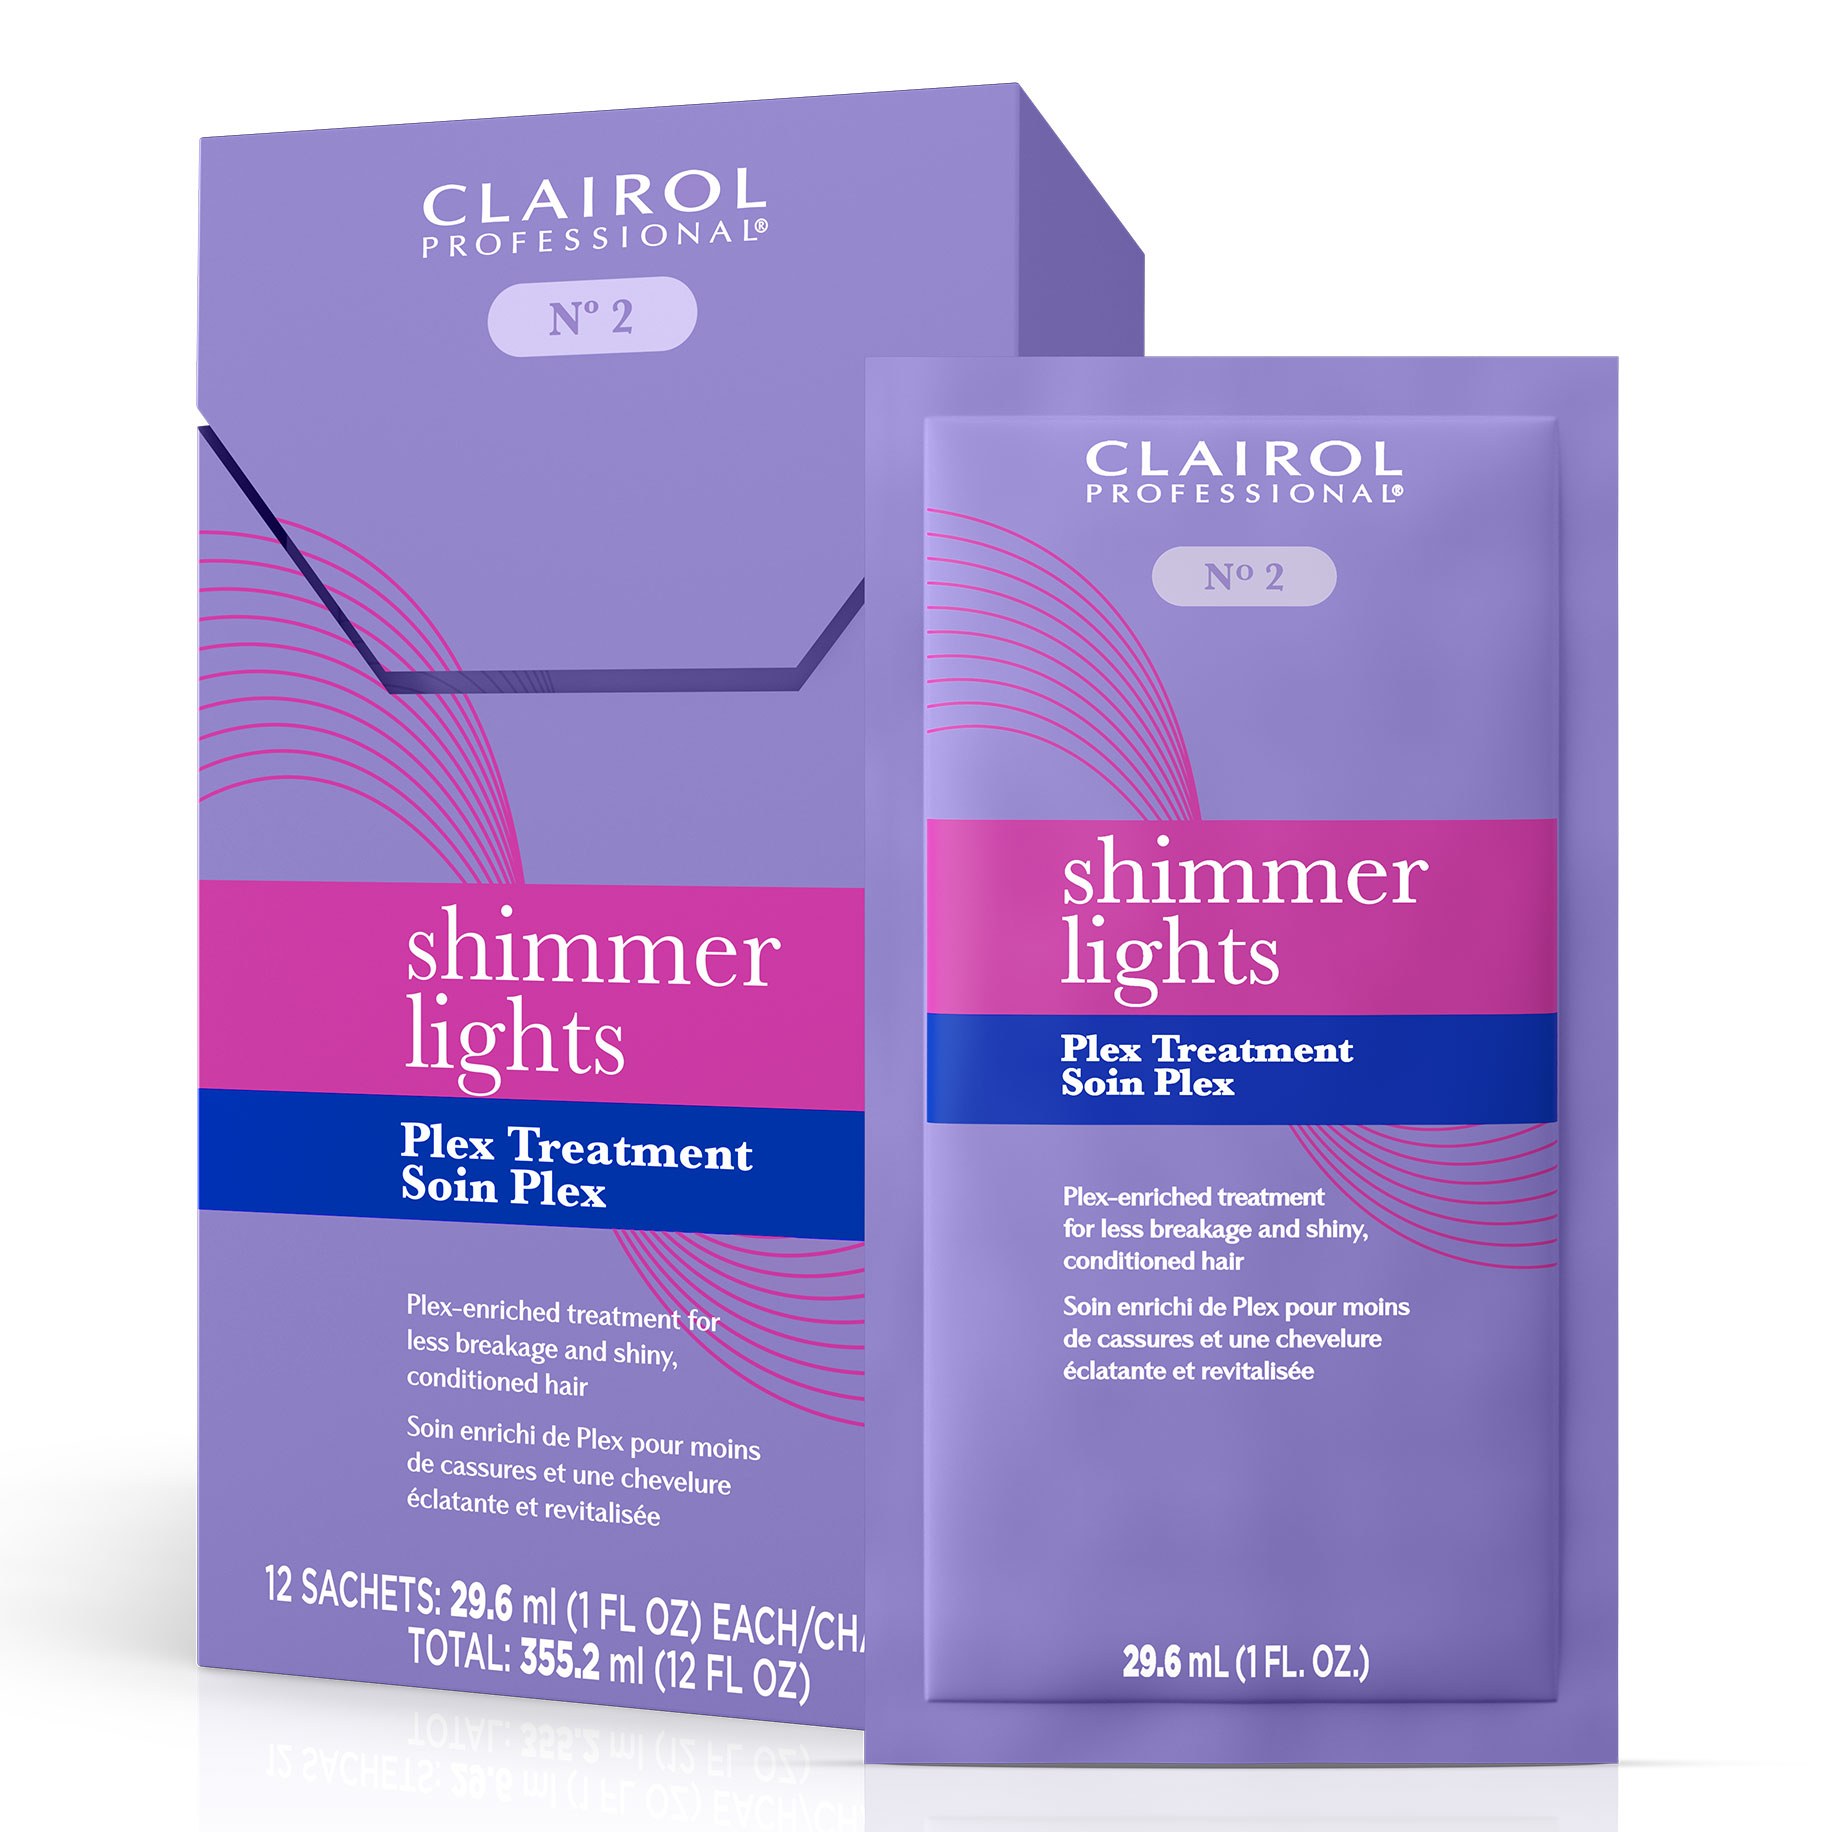 Clairol Shimmer Lights Plex Treatment Packettes